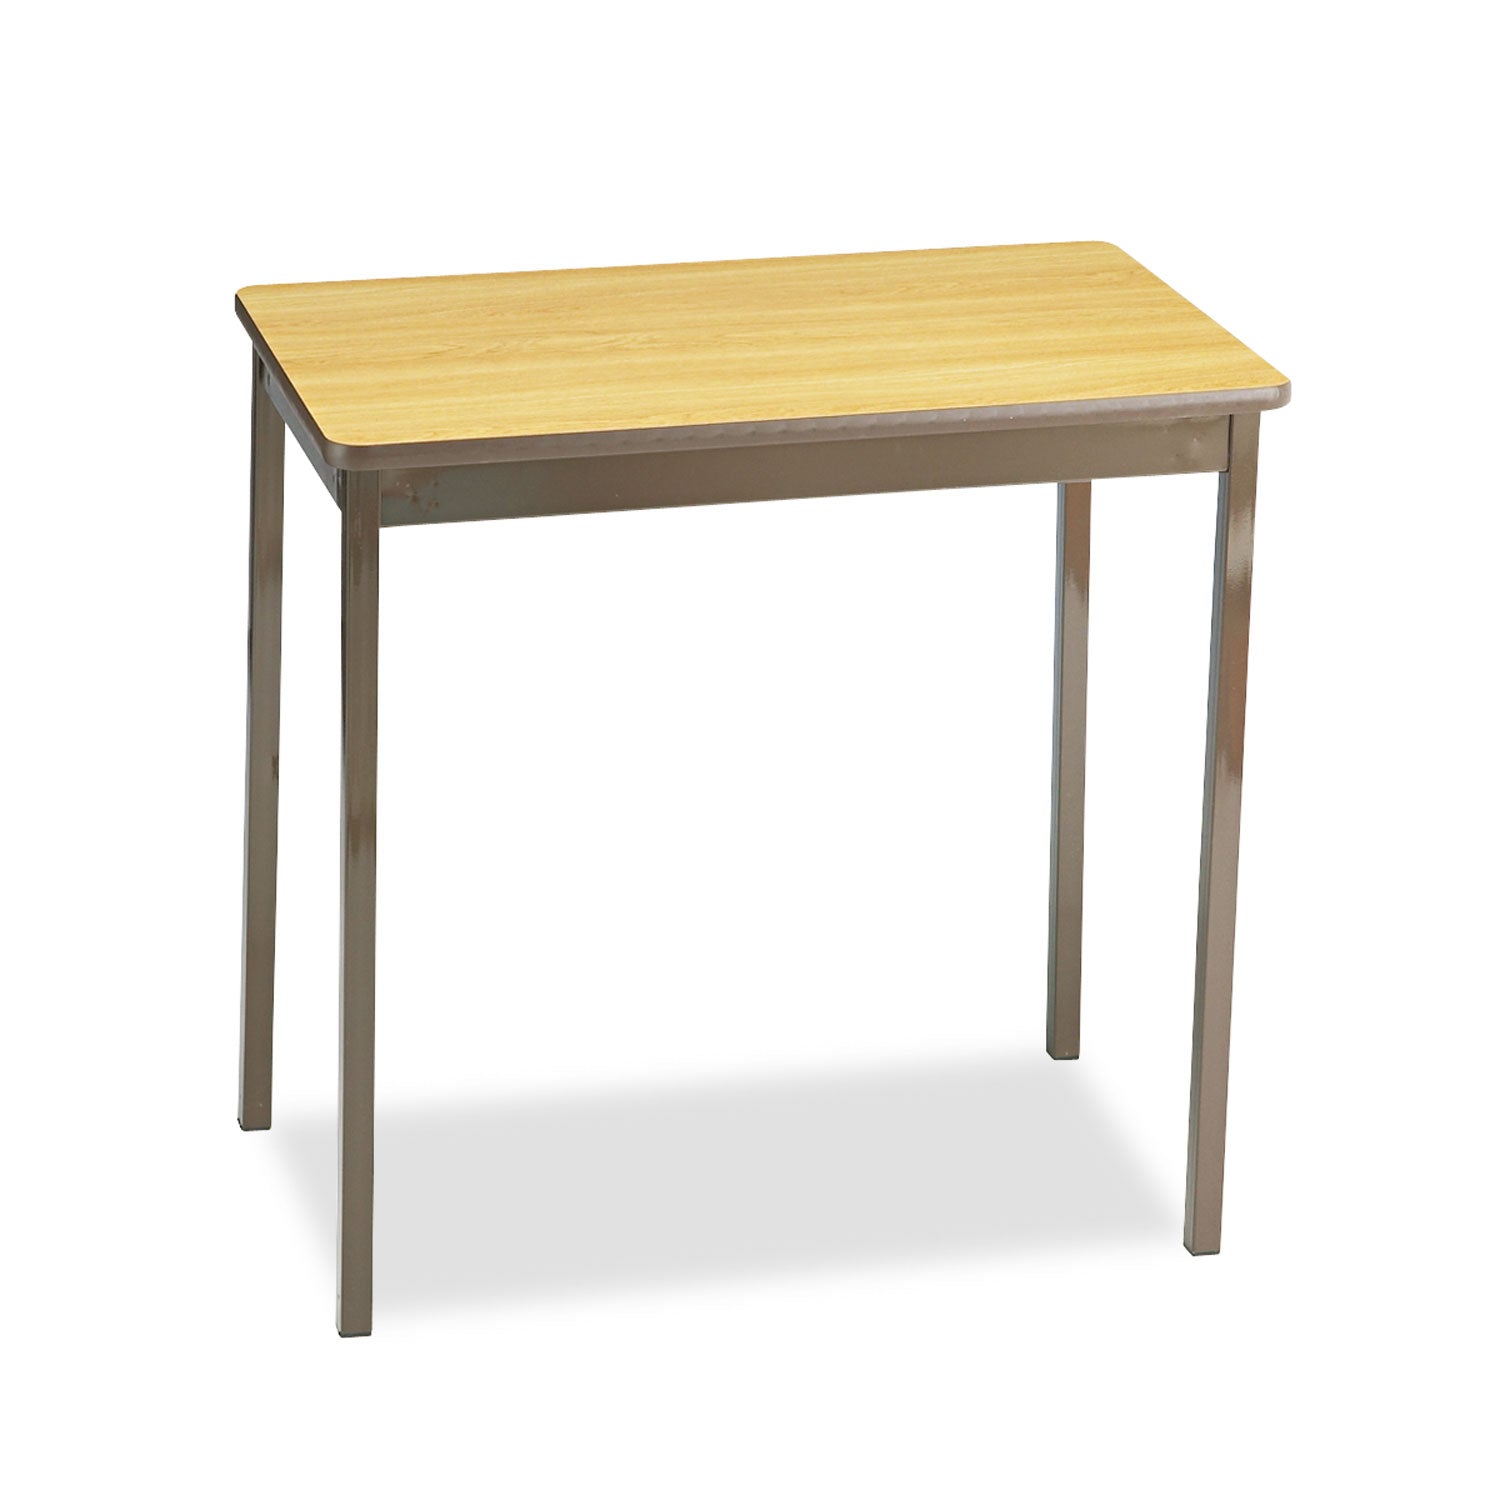 Utility Table, Rectangular, 30w x 18d x 30h, Oak/Brown - 